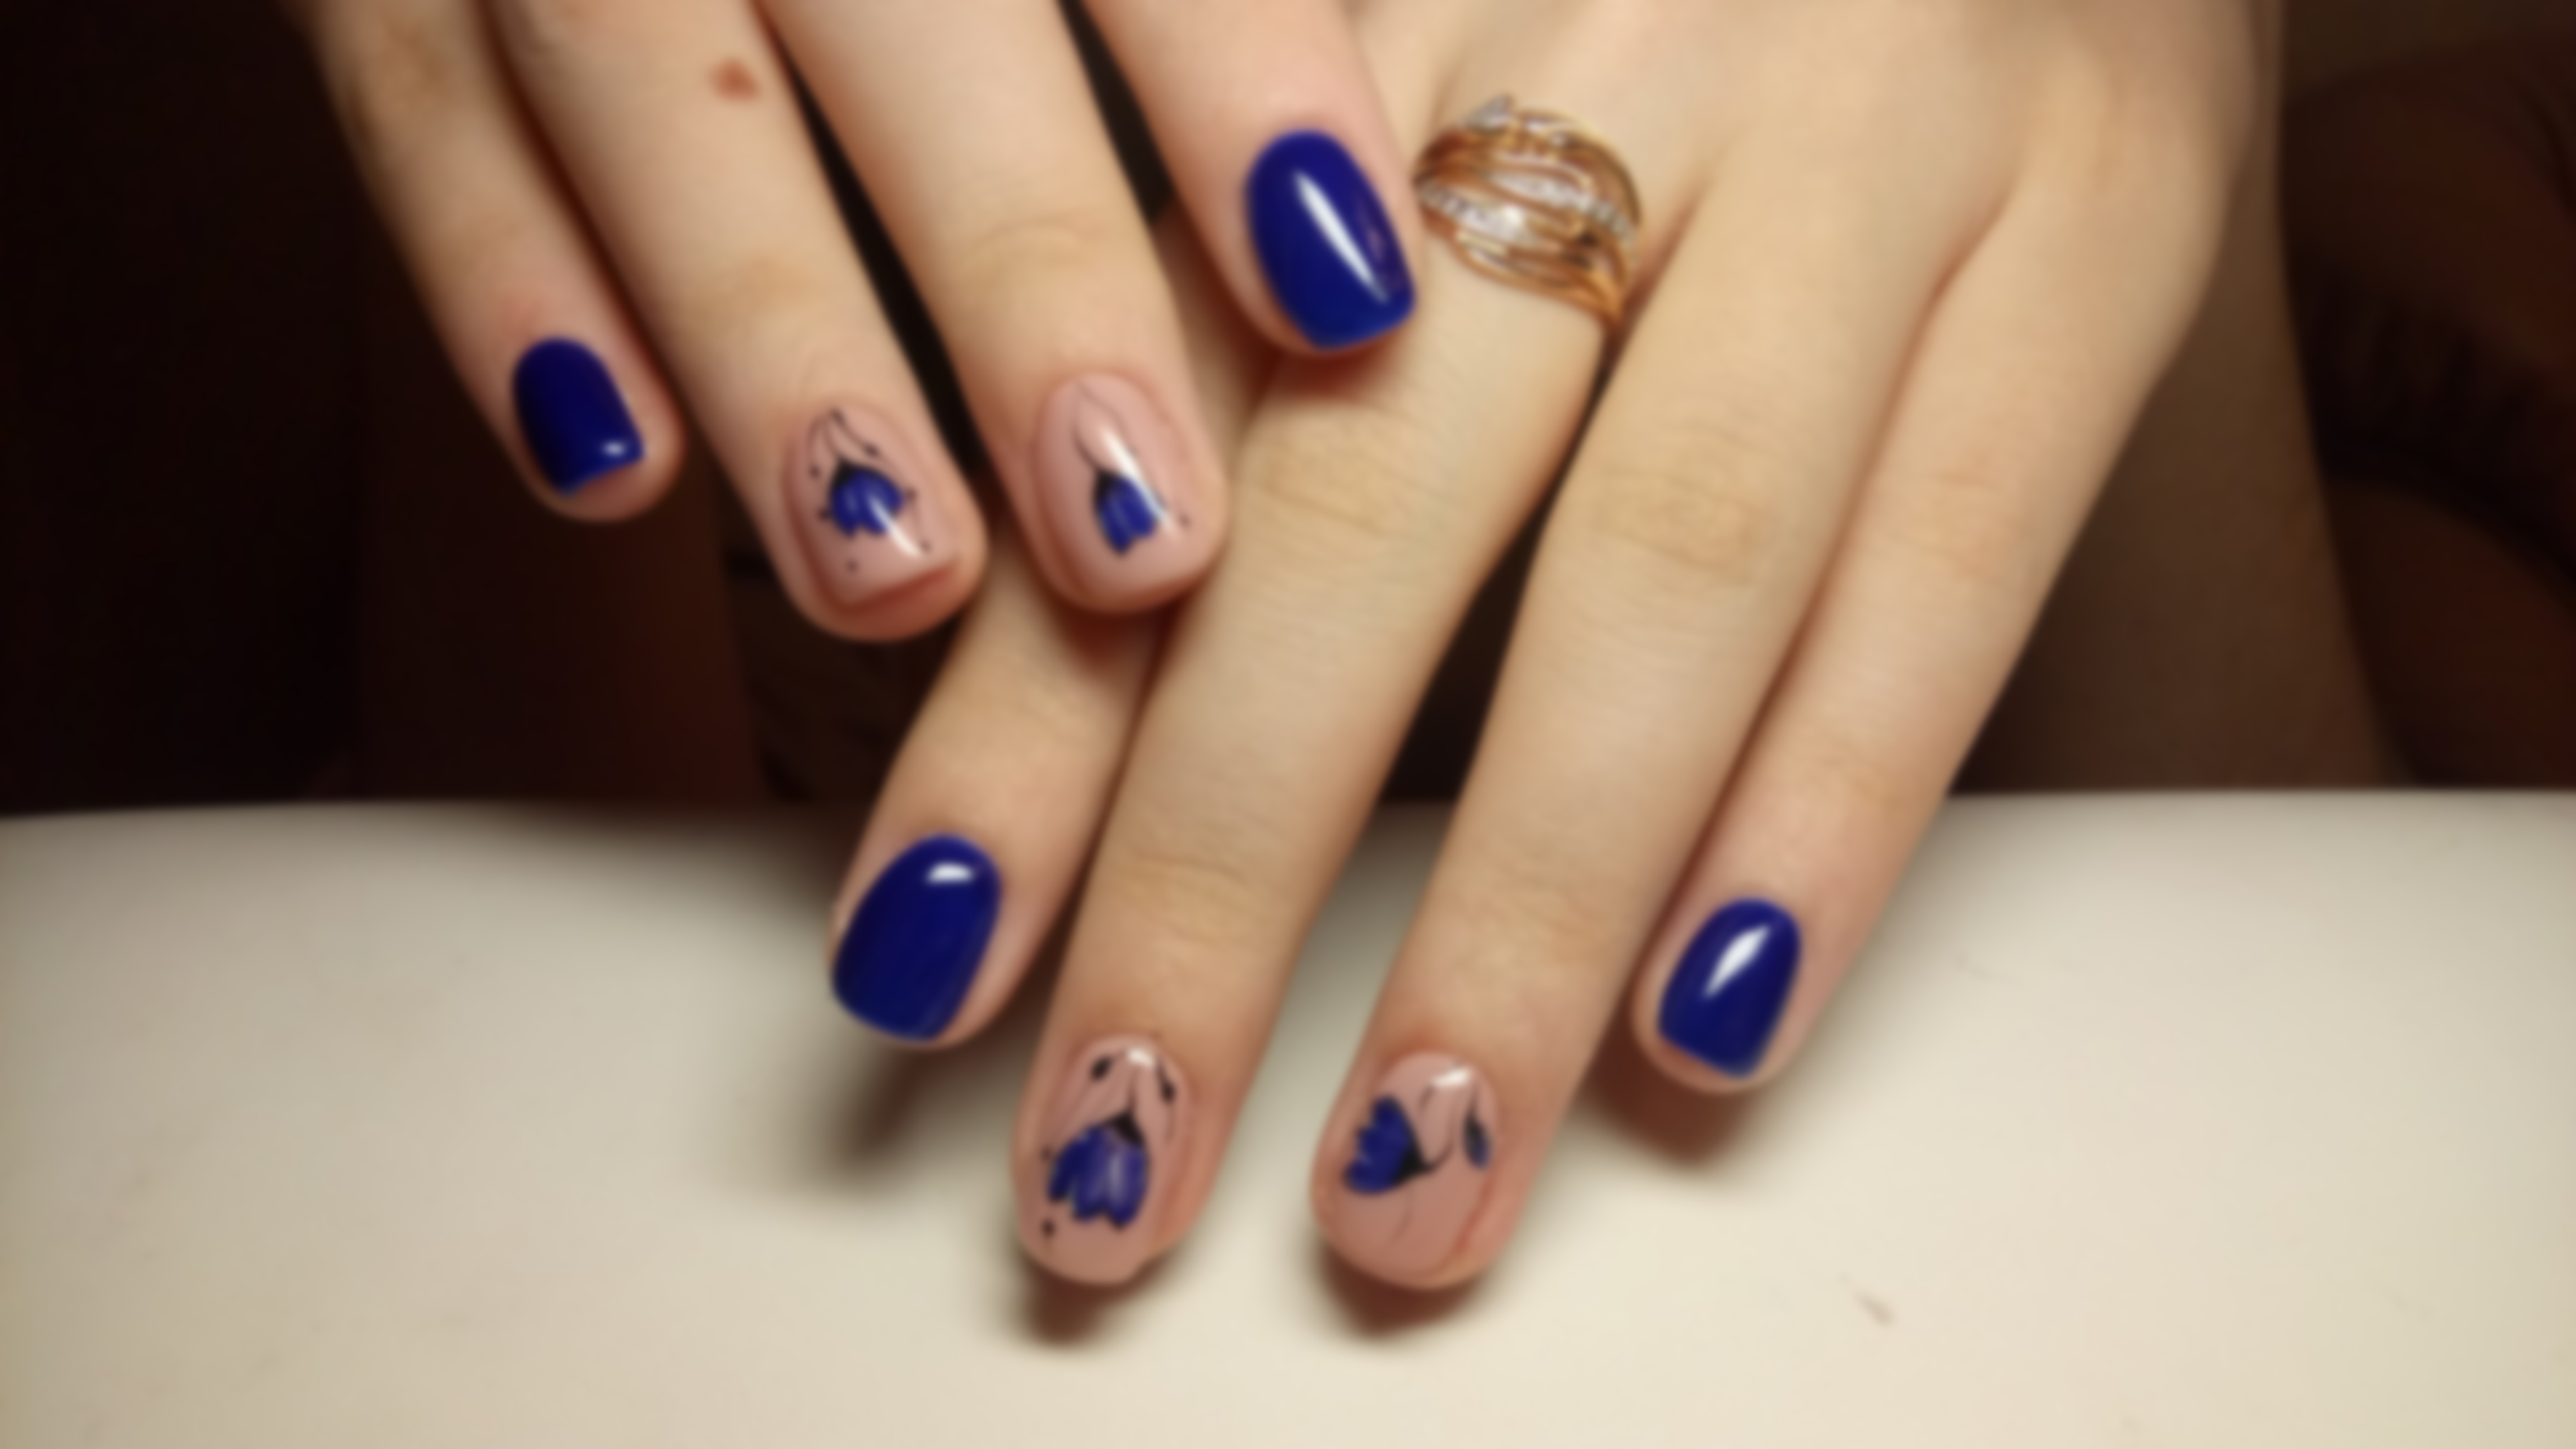 Дизайн ногтей синий короткие ногти. Маникюр. Ногти короткие. Синий маникюр. Синие короткие ногти.